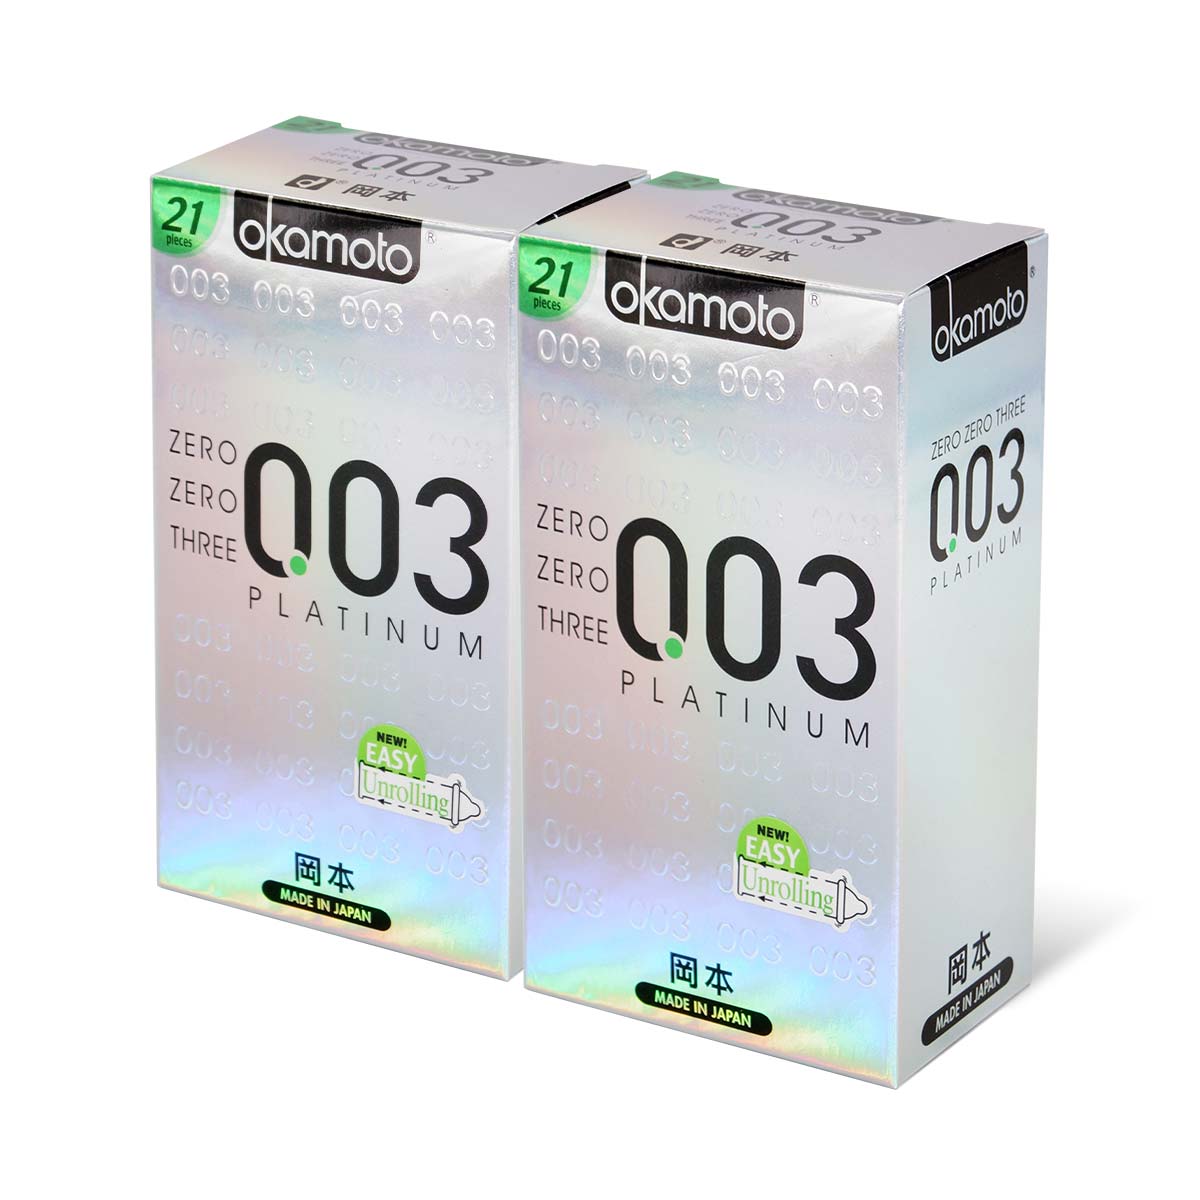 Okamoto 0.03 Platinum 21s Twin Pack Set 42 pieces condom-thumb